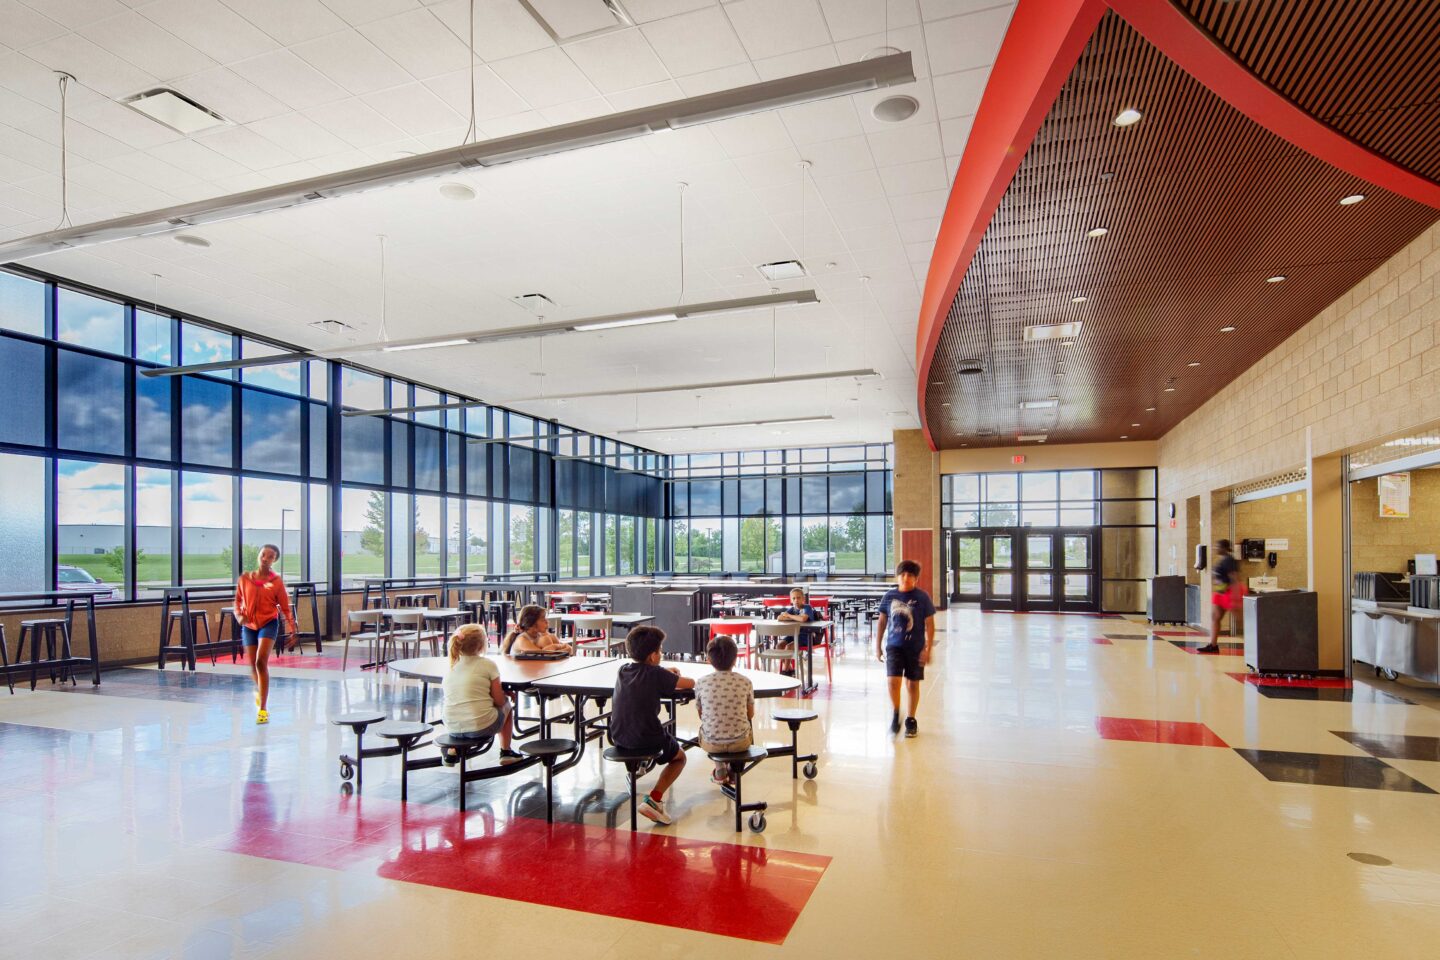 Fran Fruzen Intermediate School cafeteria with lunch tables